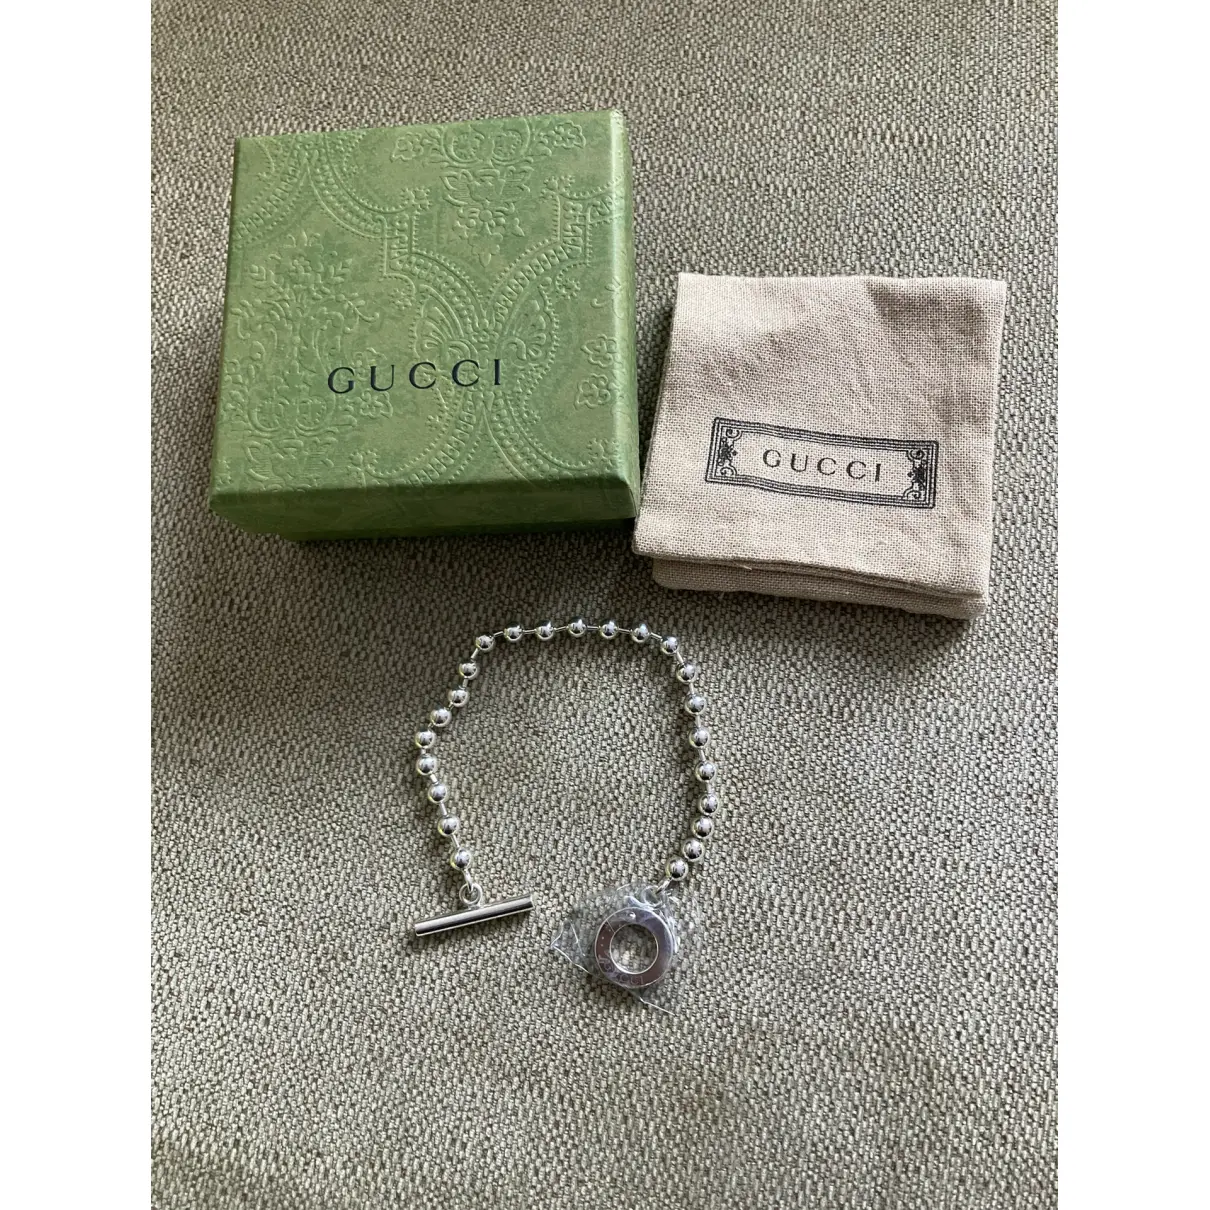 Buy Gucci Icon silver bracelet online